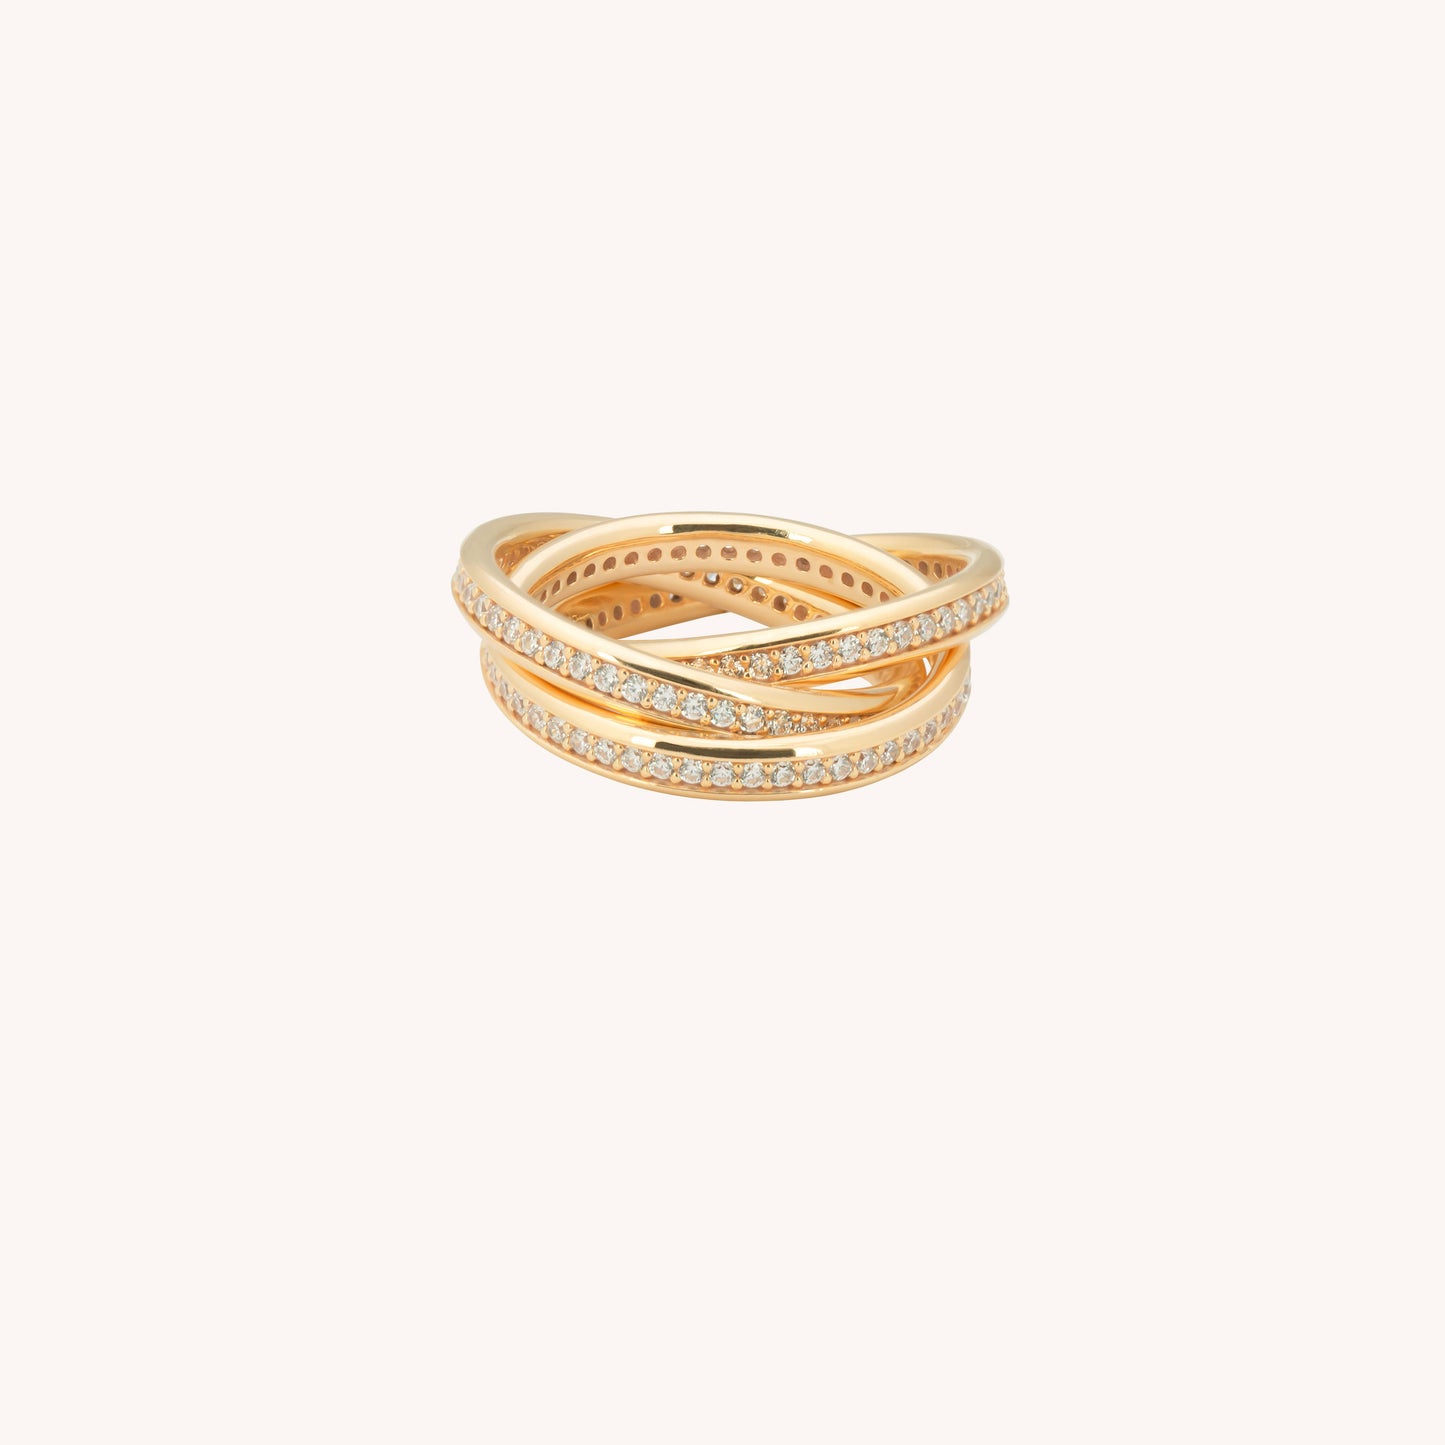 Tasha triple ring - gold plated